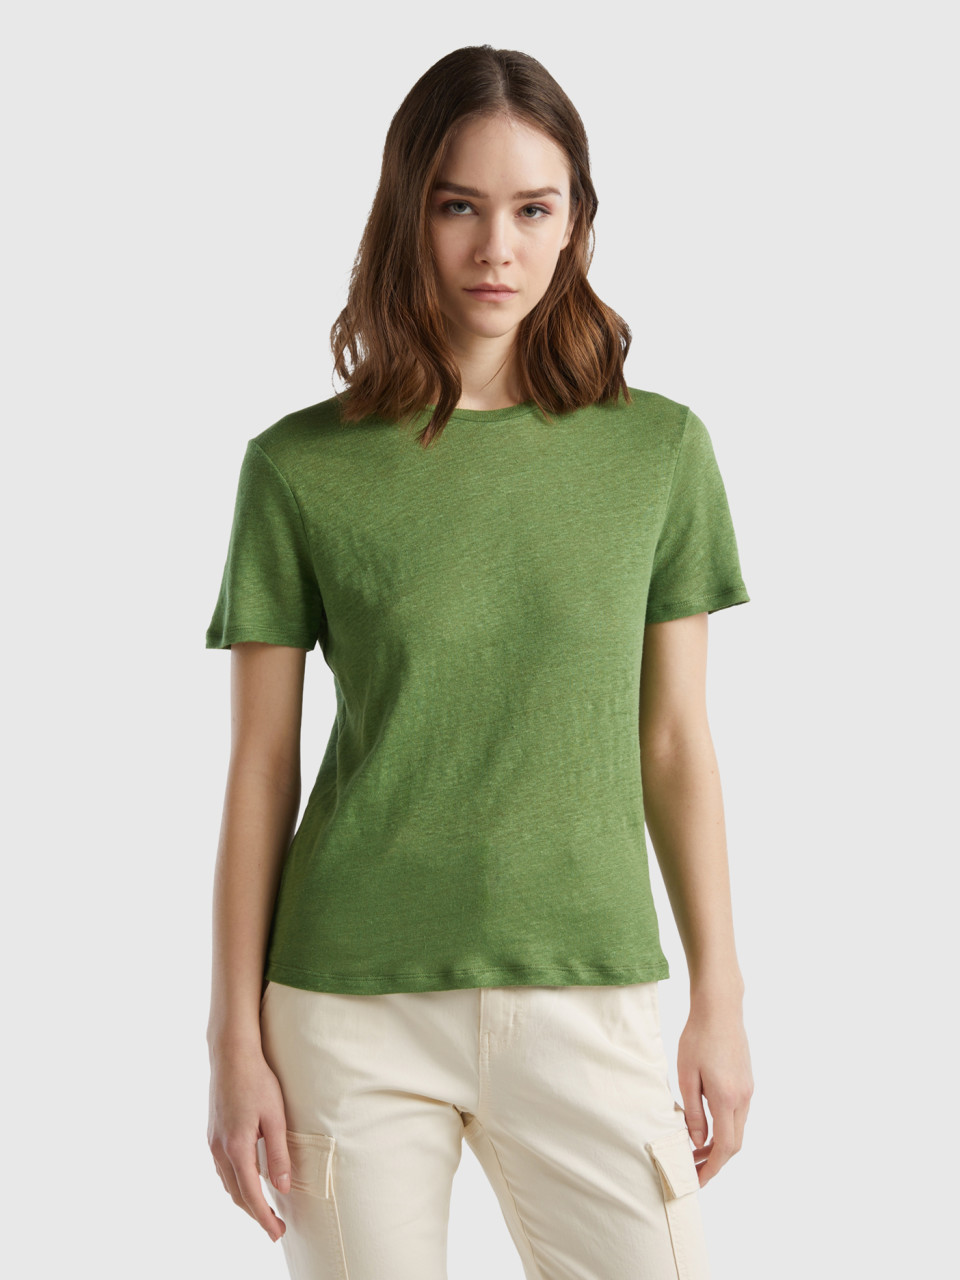 Benetton, Crew Neck T-shirt In Pure Linen, Military Green, Women